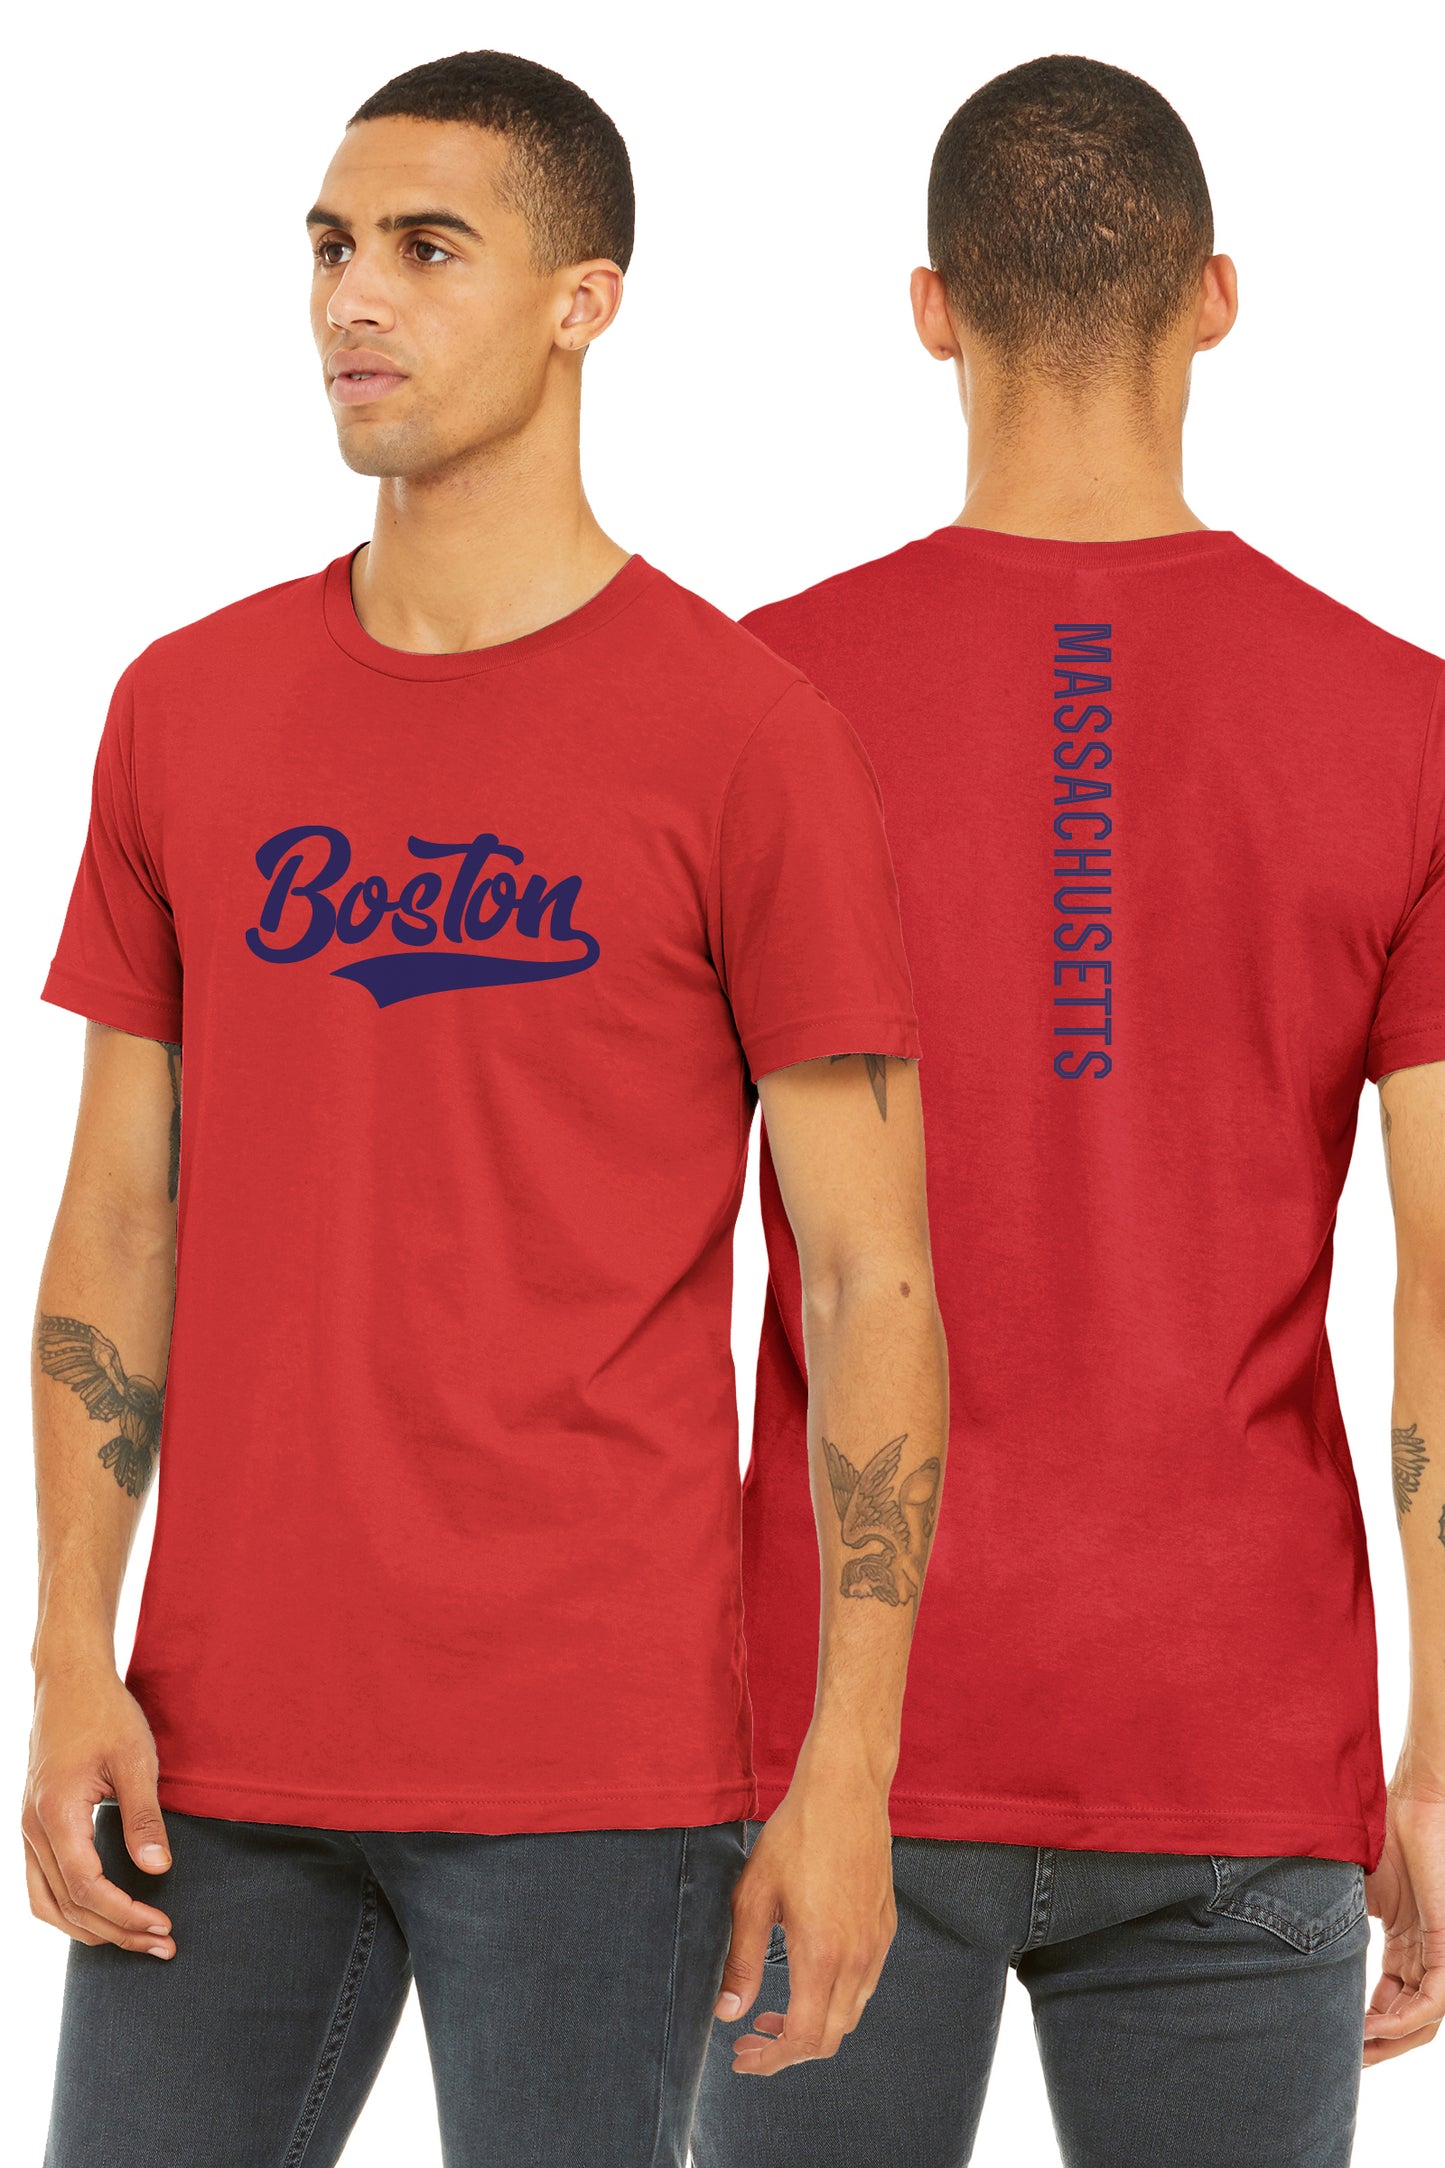 Daxton Adult Unisex Tshirt Boston Script with Massachusett Vertical on the Back